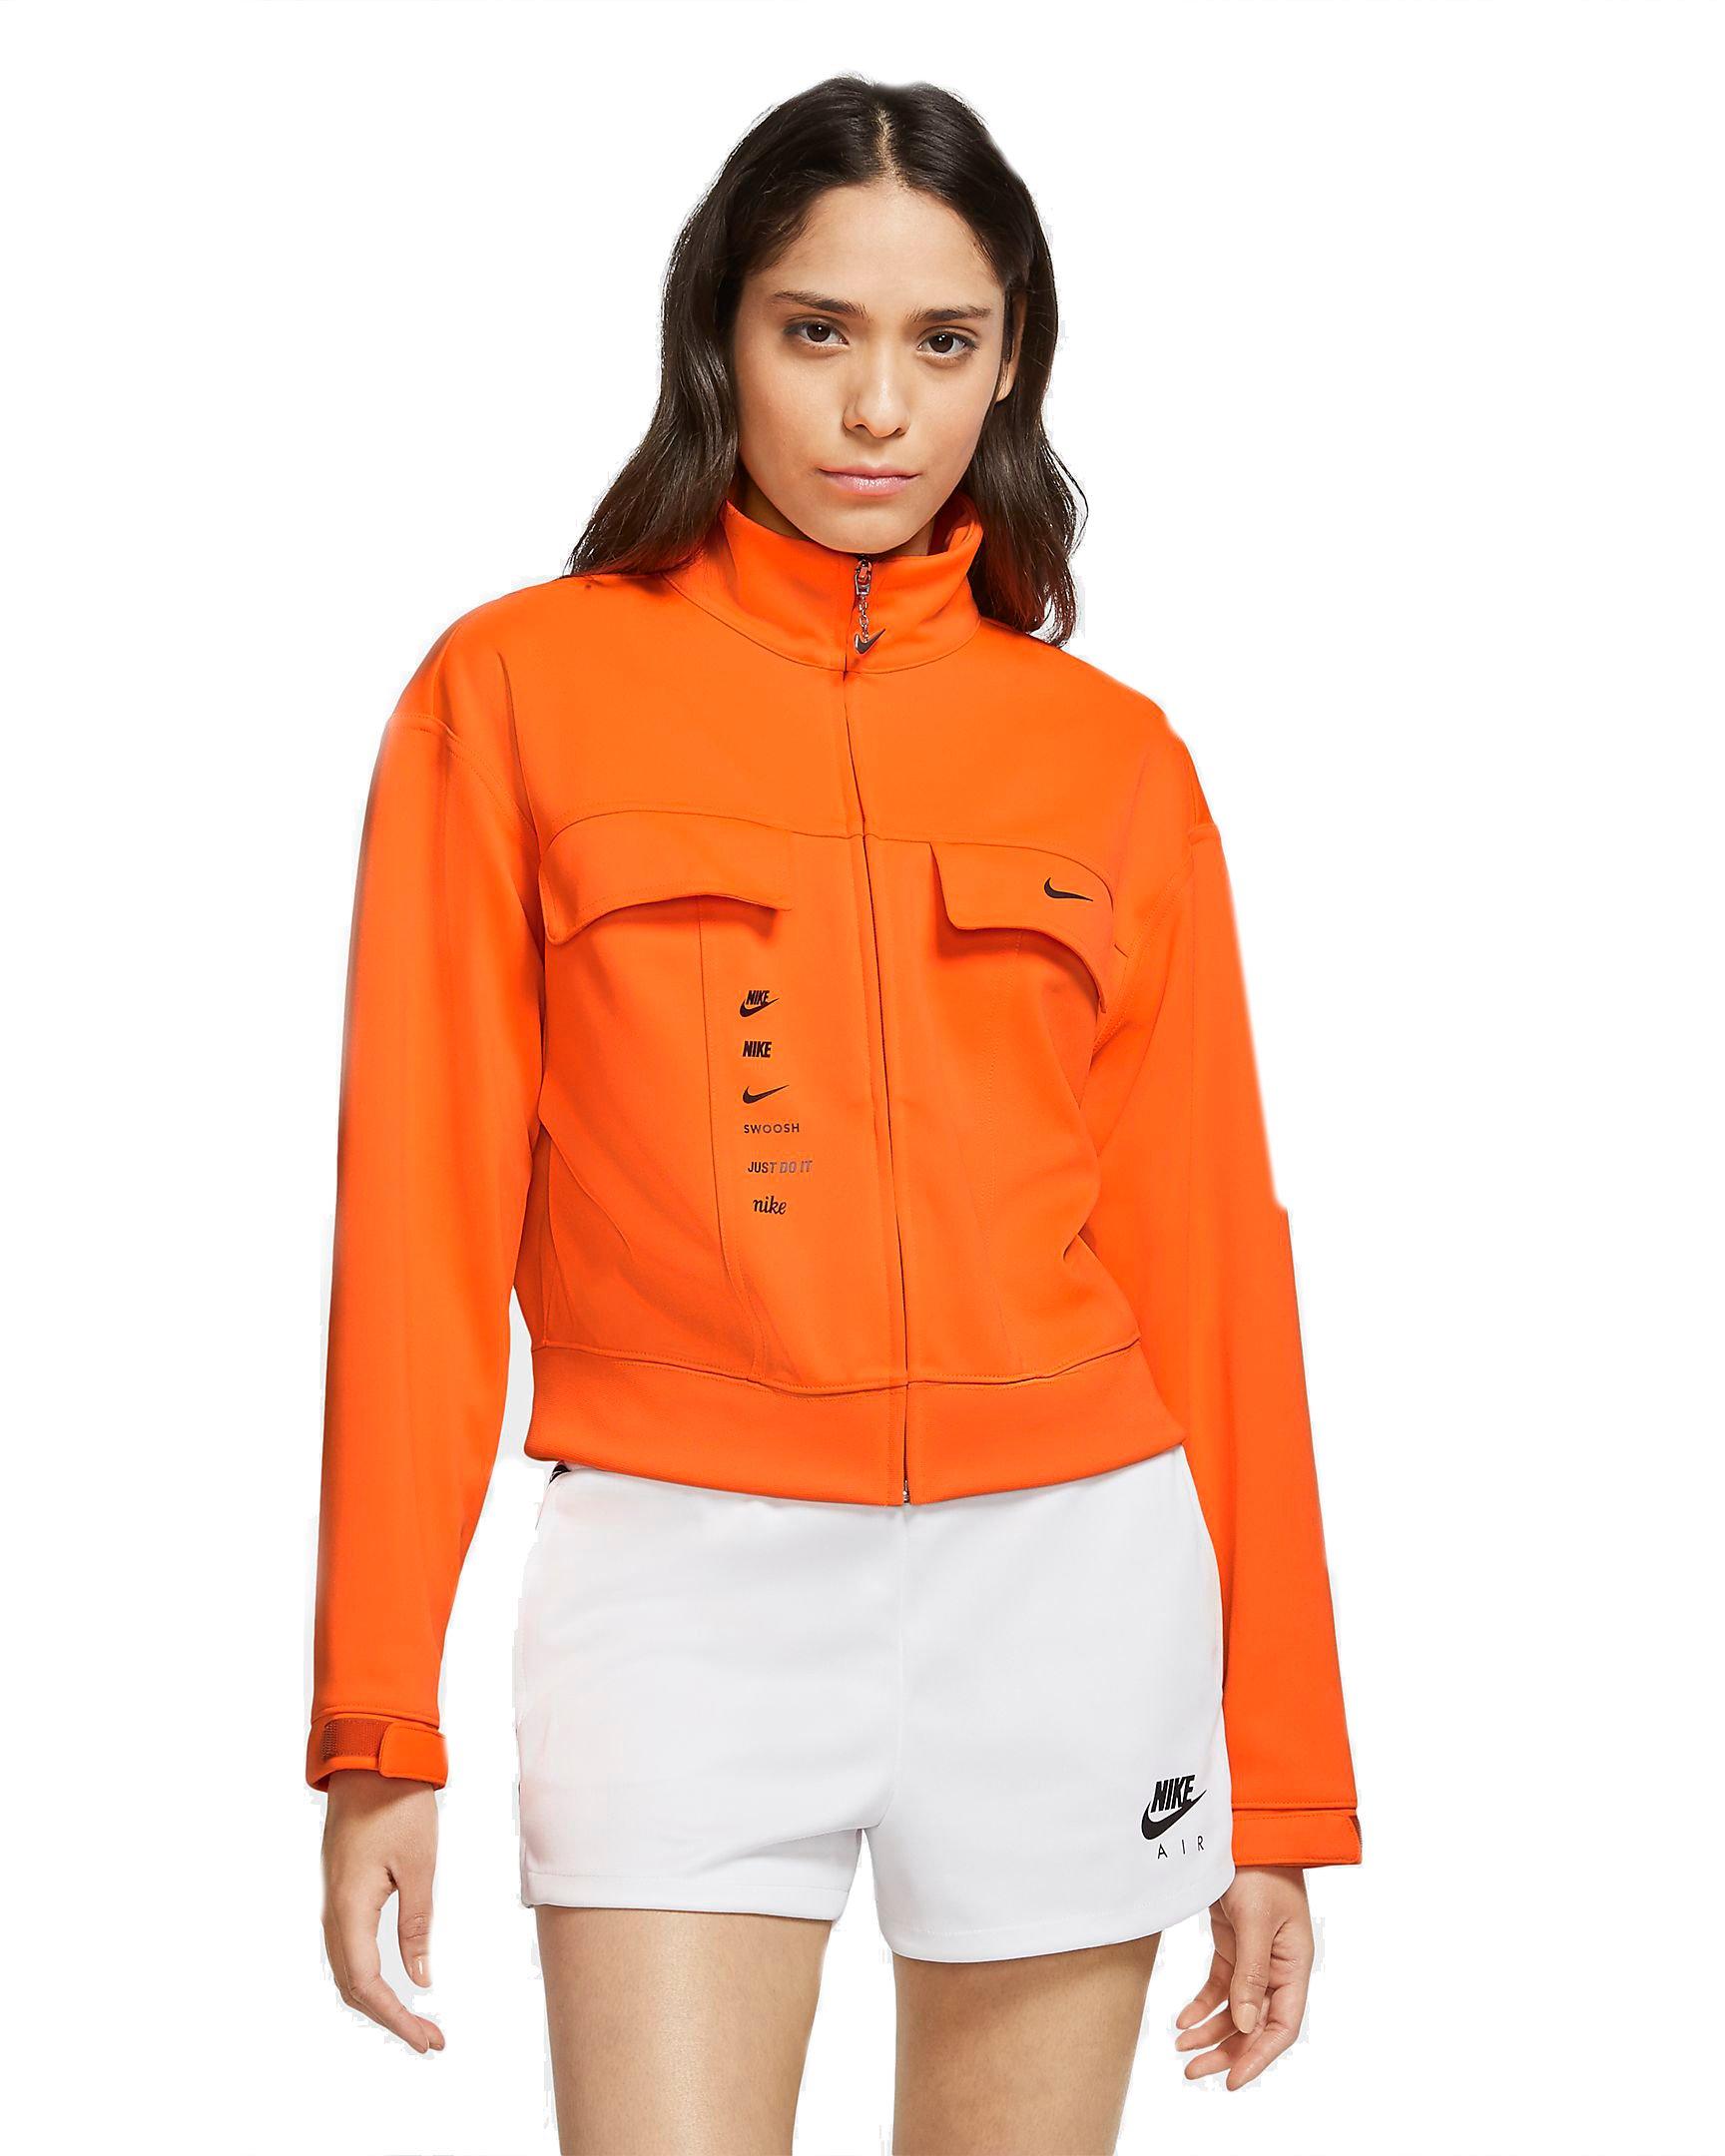 nike orange jacket women's